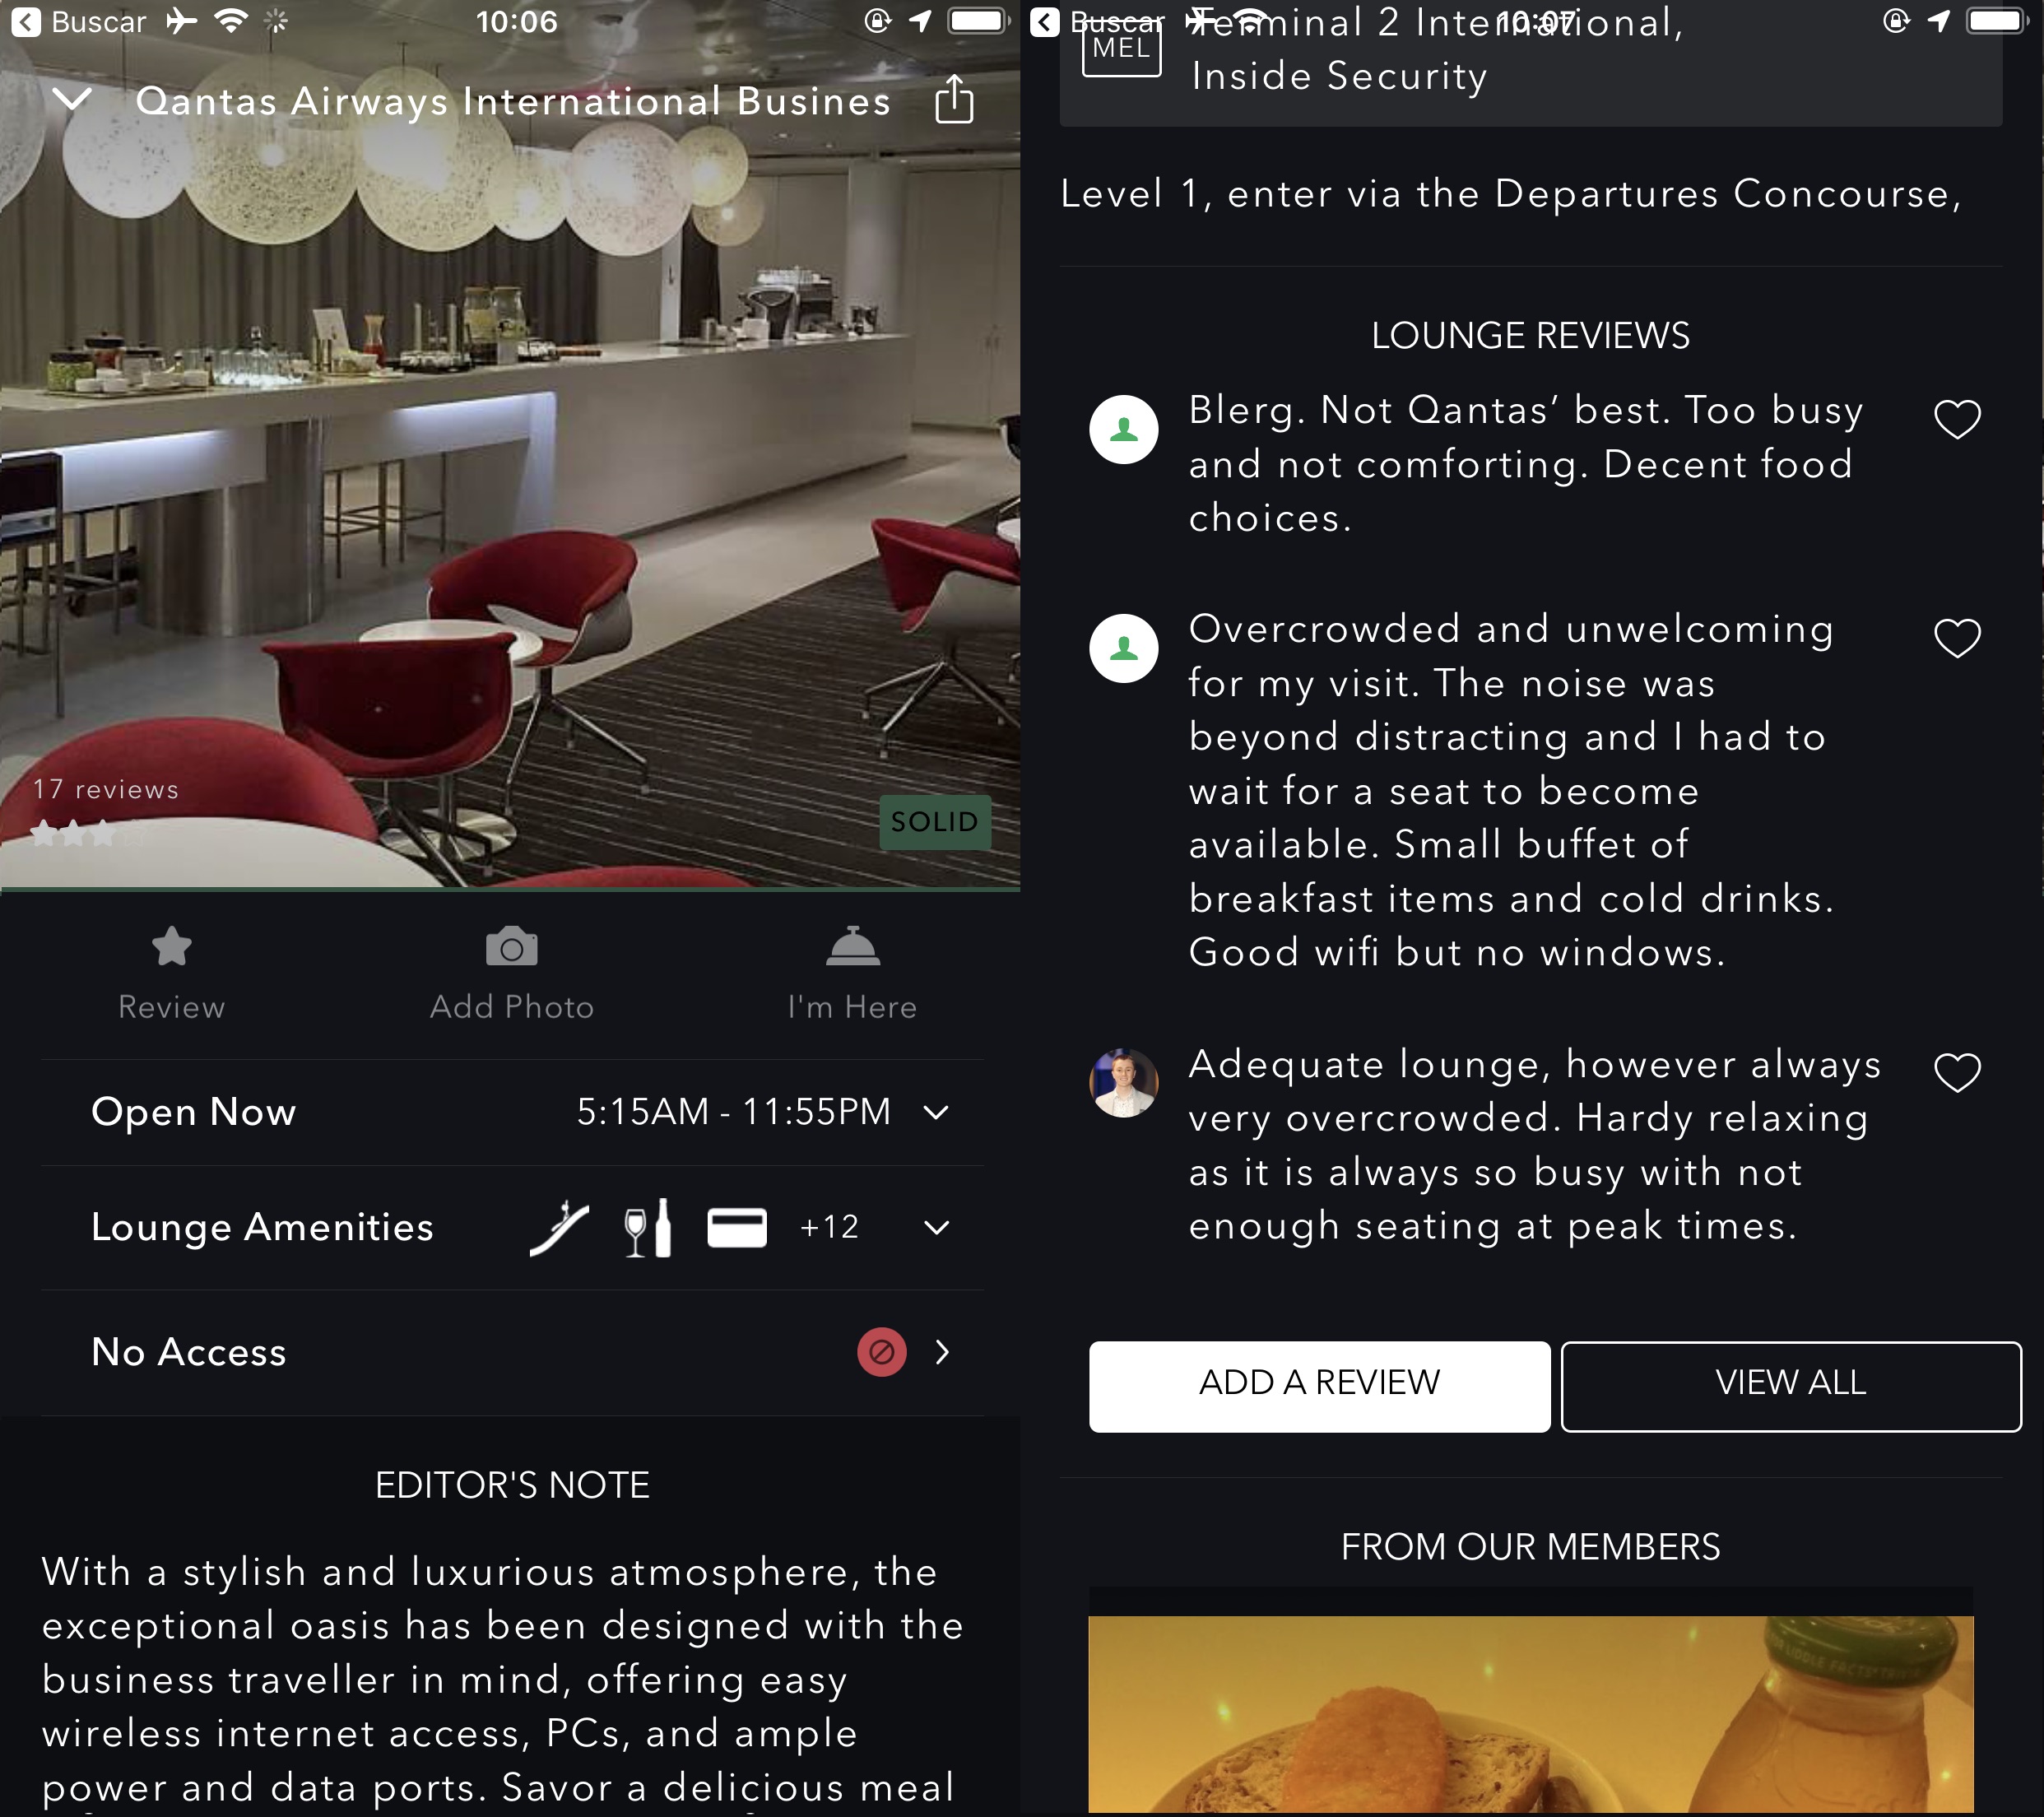 LoungeBuddy app user lounge reviews